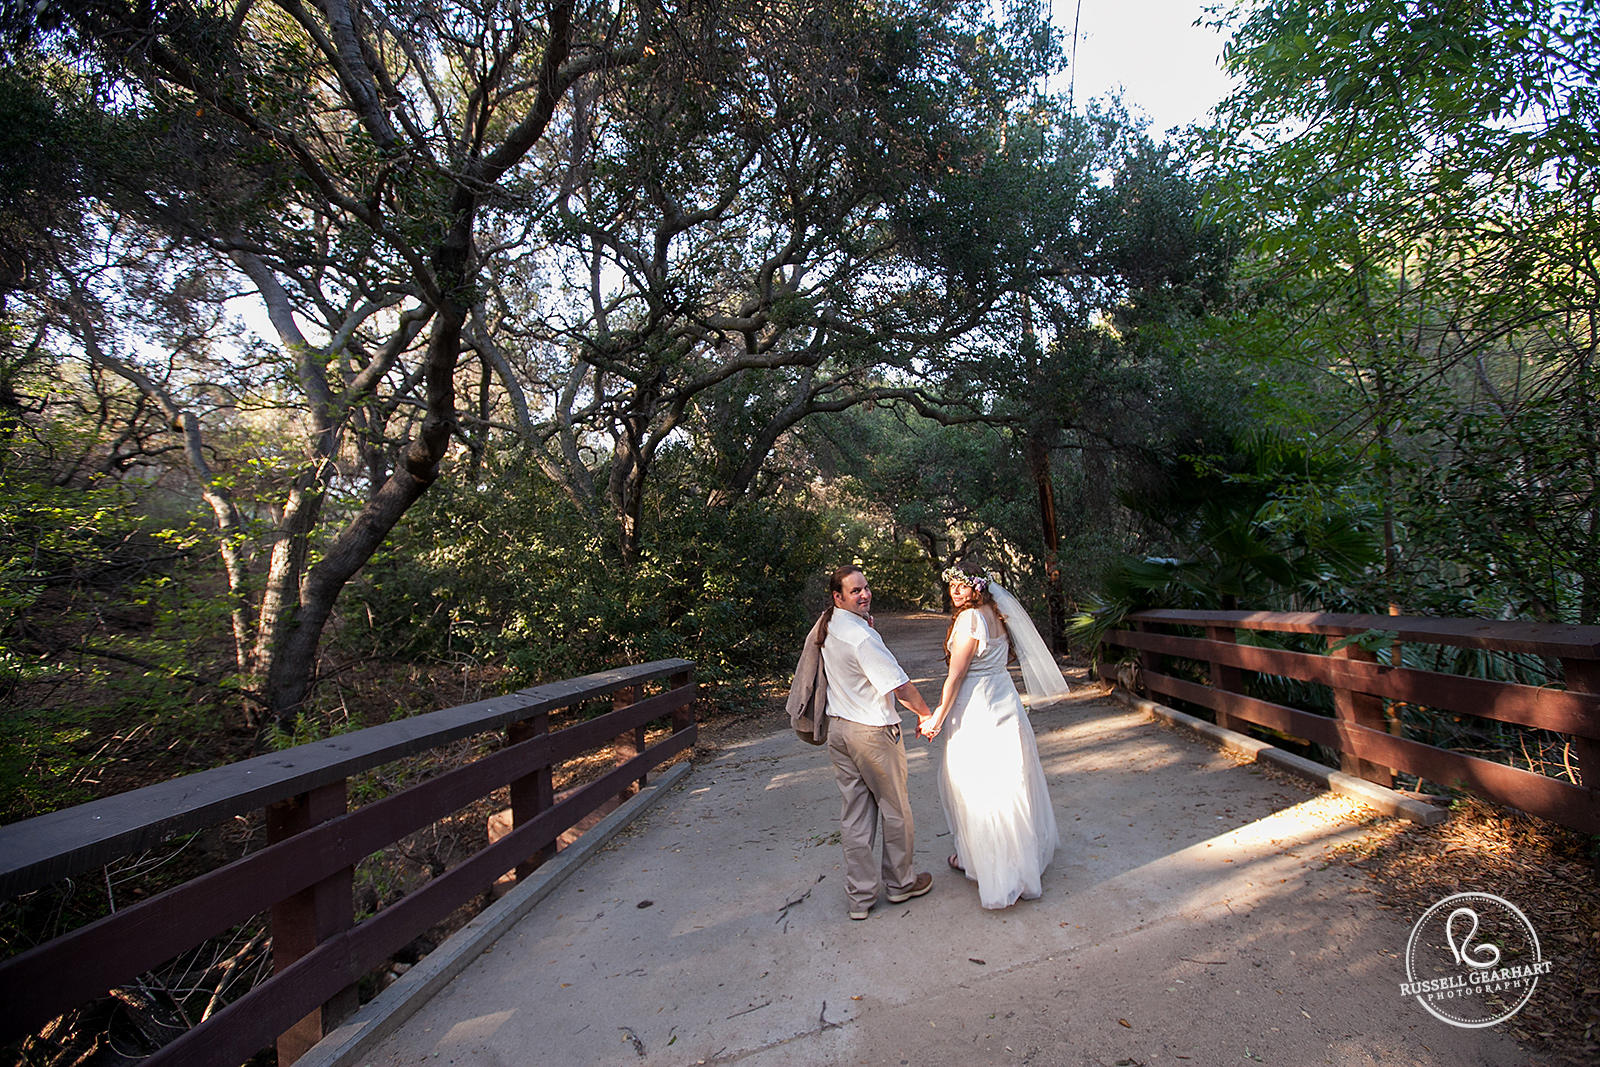 Wedding Couple Crossing Bridge – Oak Canyon Nature Center Wedding: Orange County, CA – Russell Gearhart Photography – www.gearhartphoto.com  